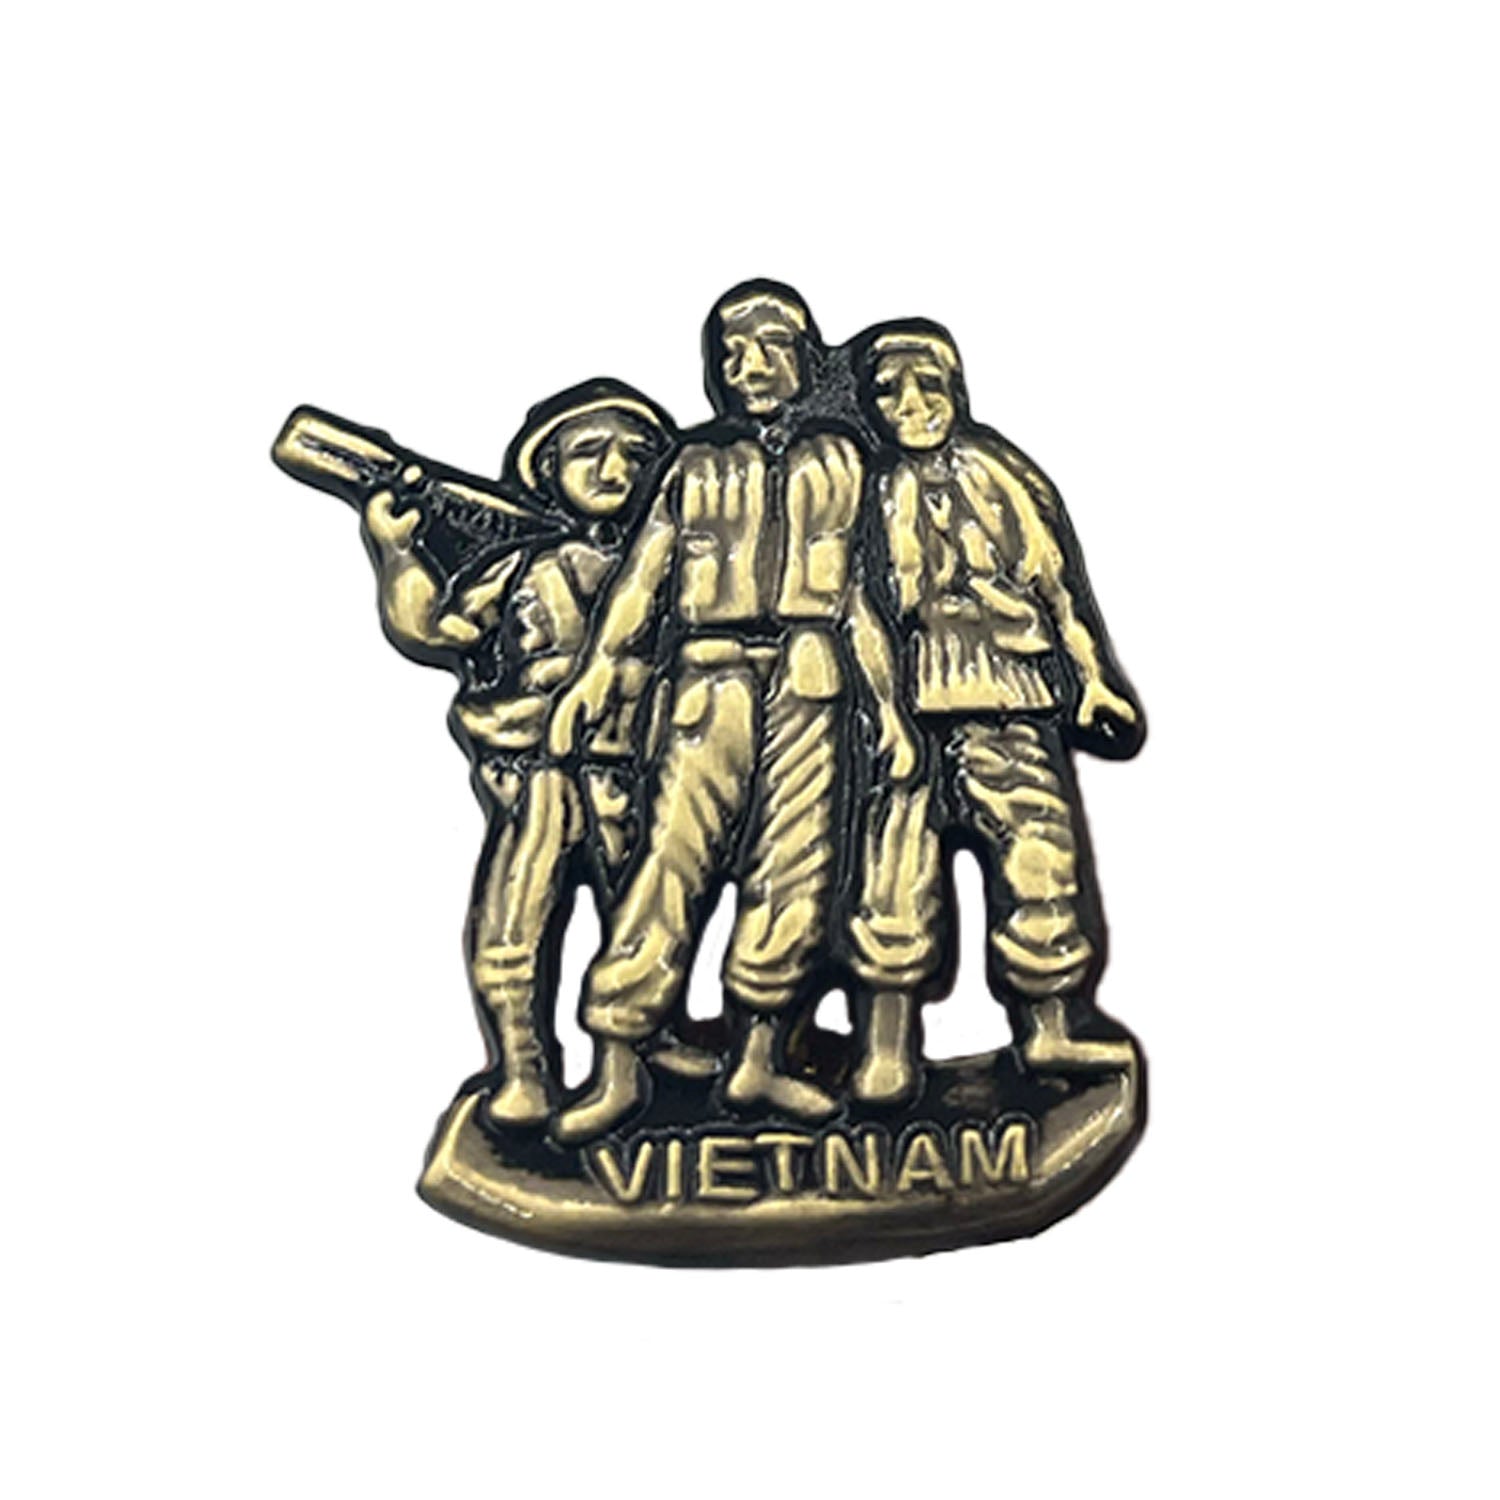 3 Men Vietnam Metal Pin - CLEARANCE!